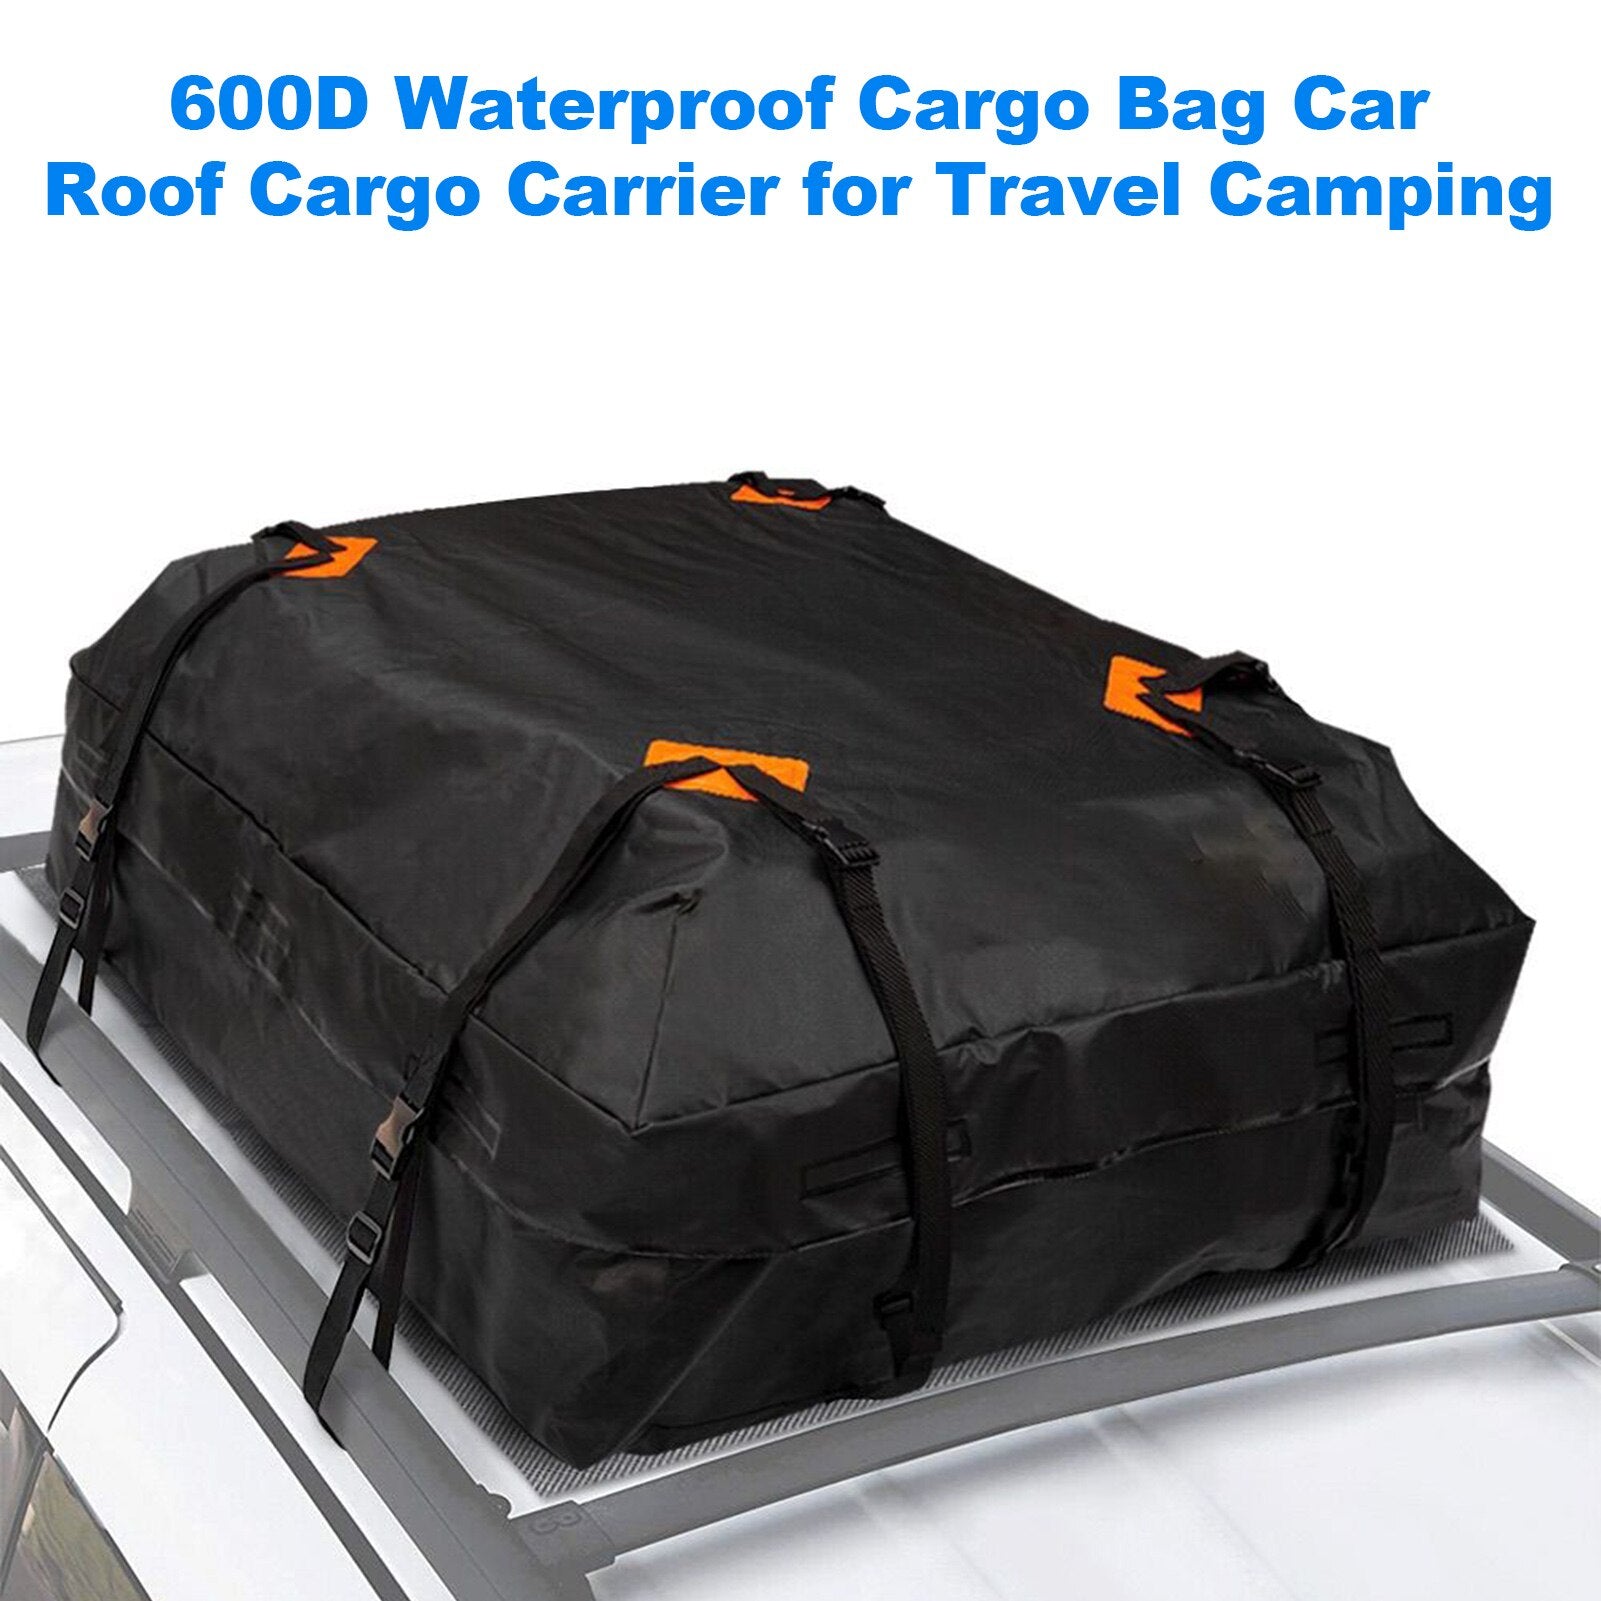 Rooftop cargo carrier_rooftop cargo box_Car Top Carrier_Car Roof Storage _car roof bag_car luggage carrier_roof luggage carrier_DIYlife-today